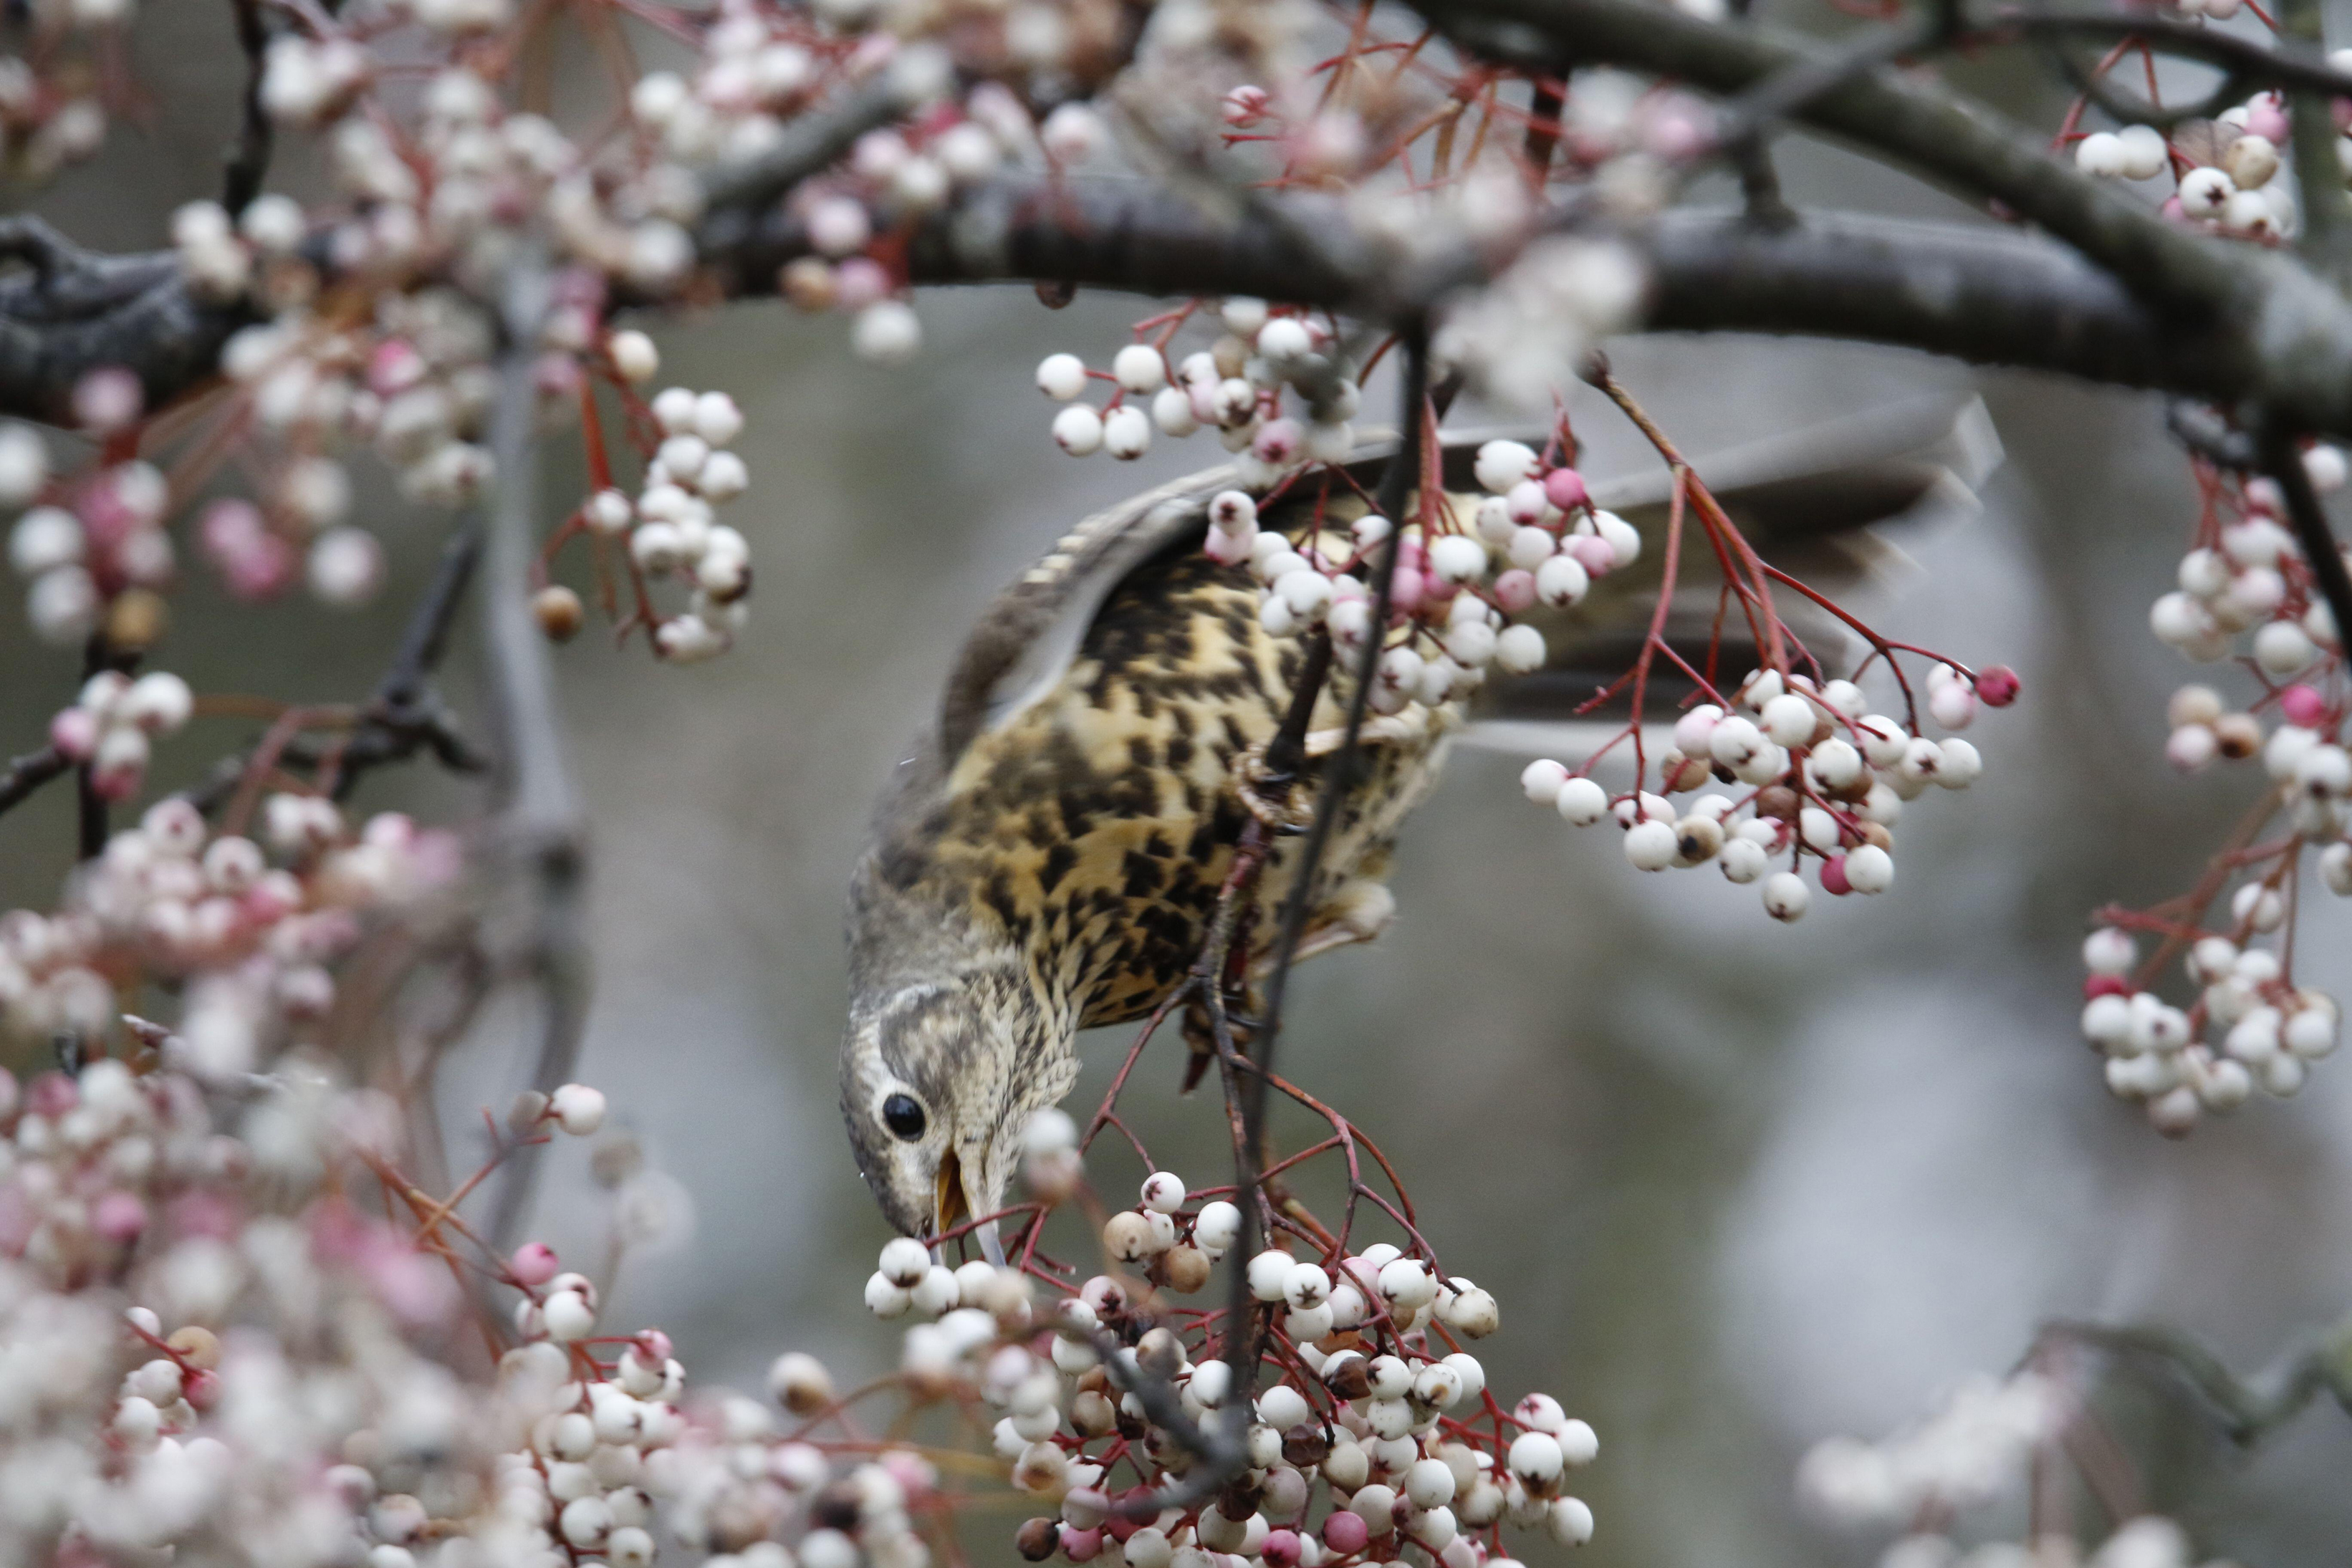 Mistle thrush feeding on winter berries (Alamy/PA)